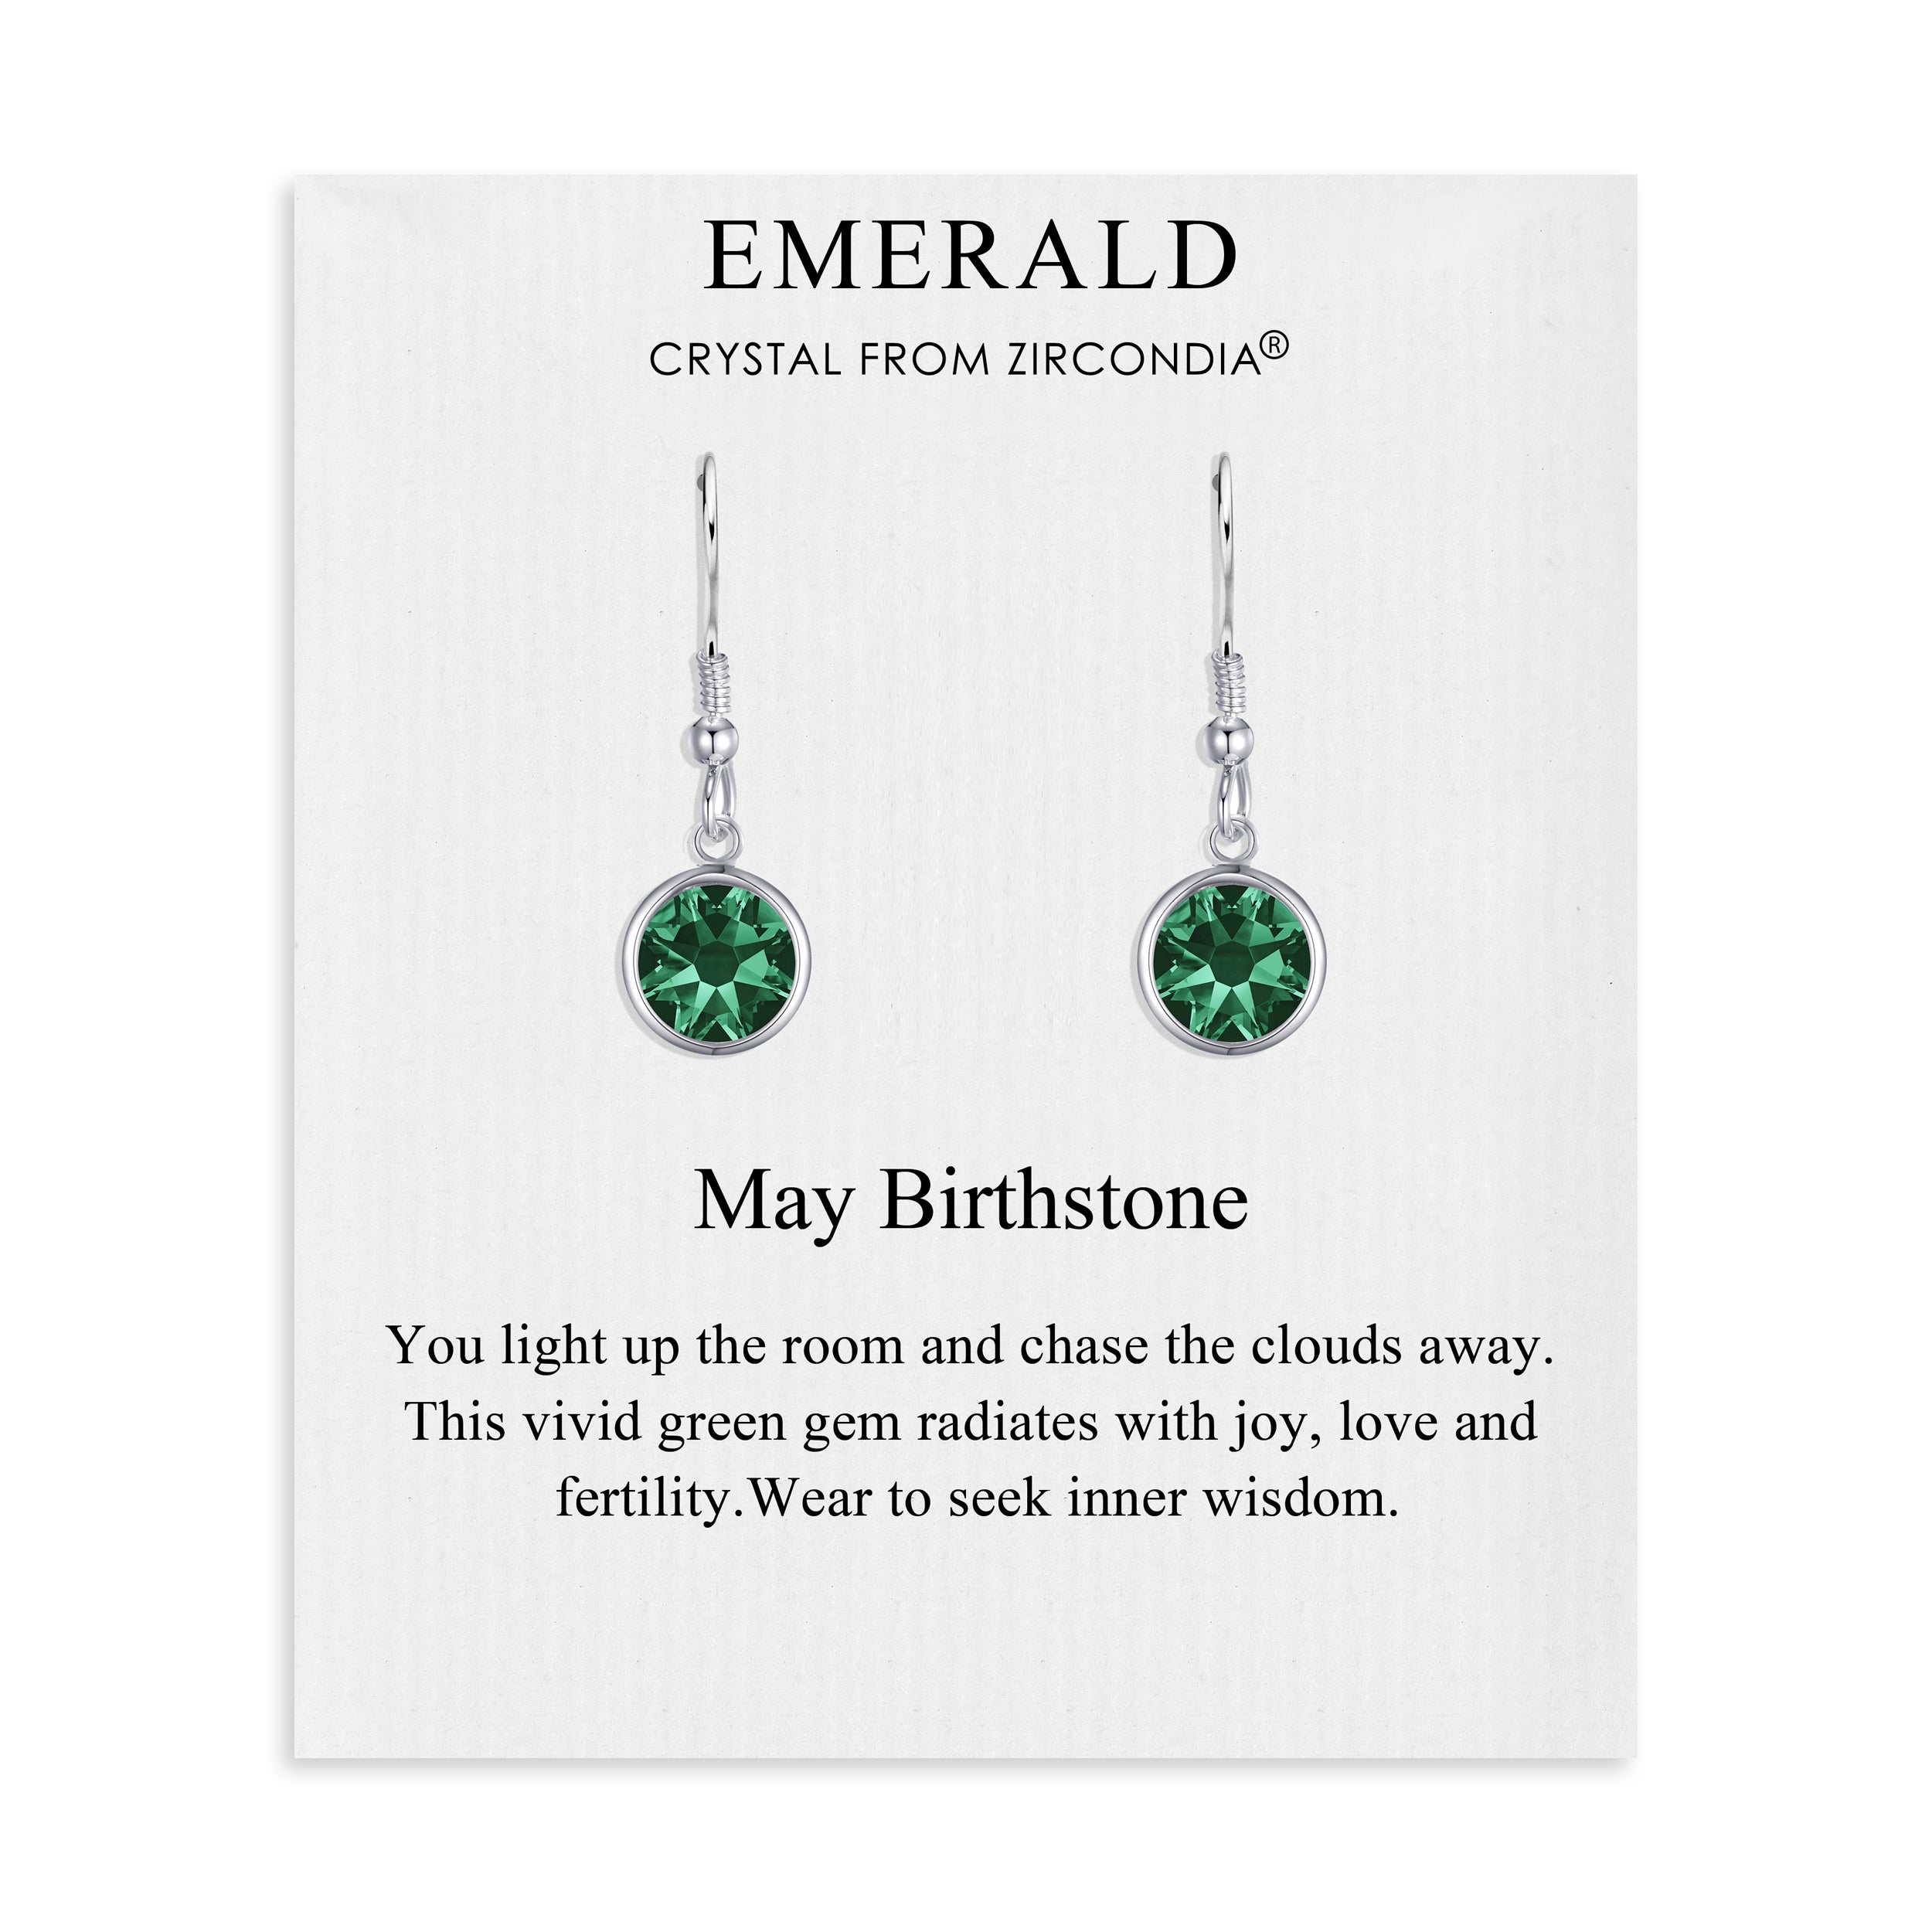 May Birthstone Drop Earrings Created with Emerald Zircondia® Crystals by Philip Jones Jewellery